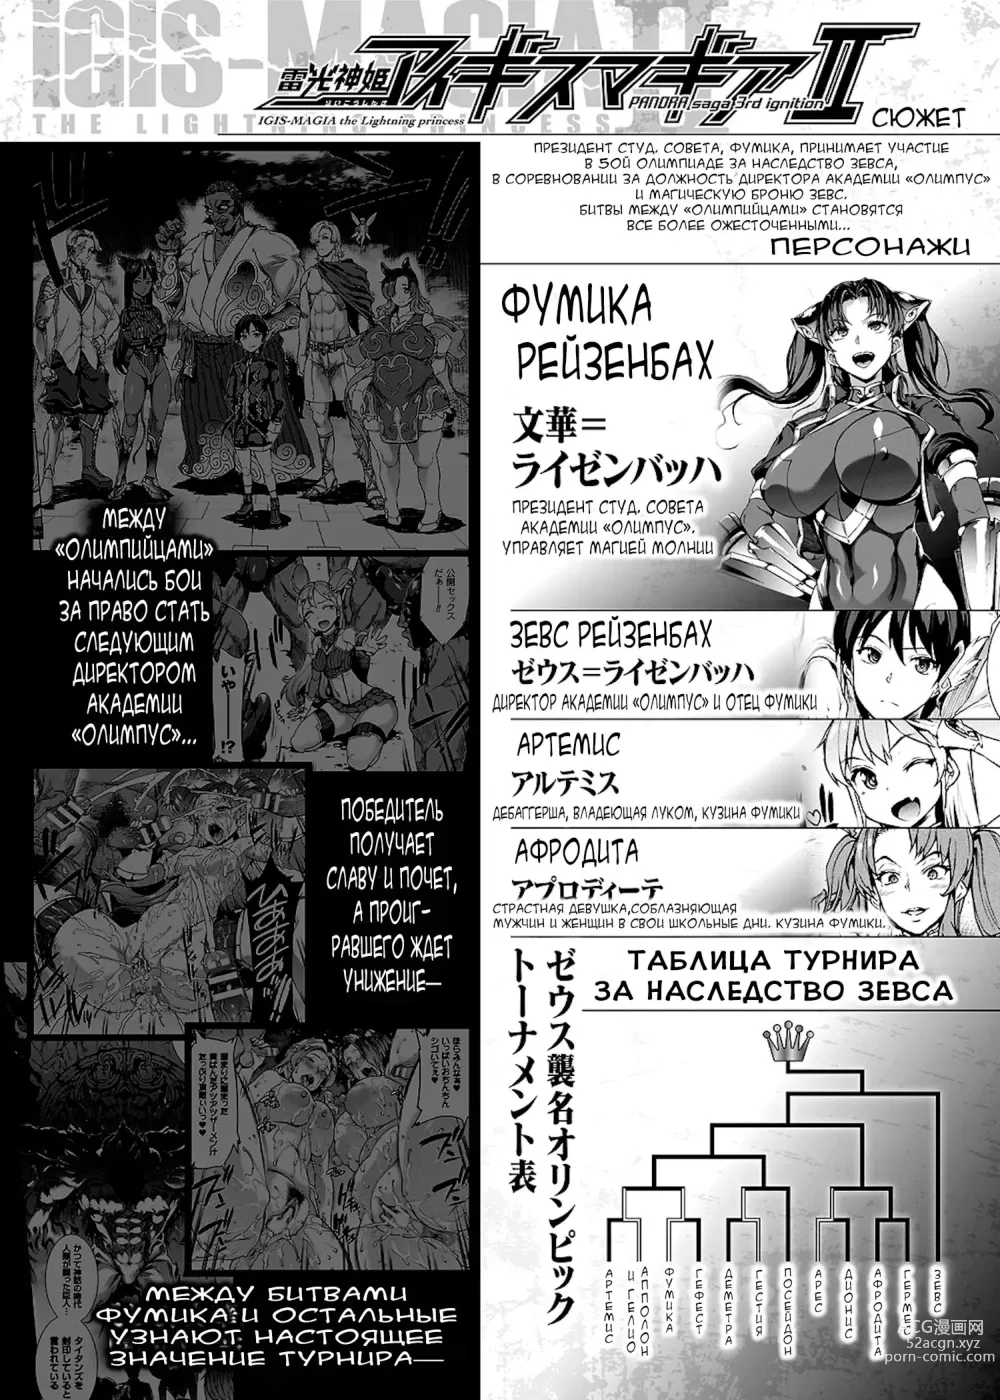 Page 7 of manga Raikou Shinki Igis Magia II -PANDRA saga 3rd ignition-